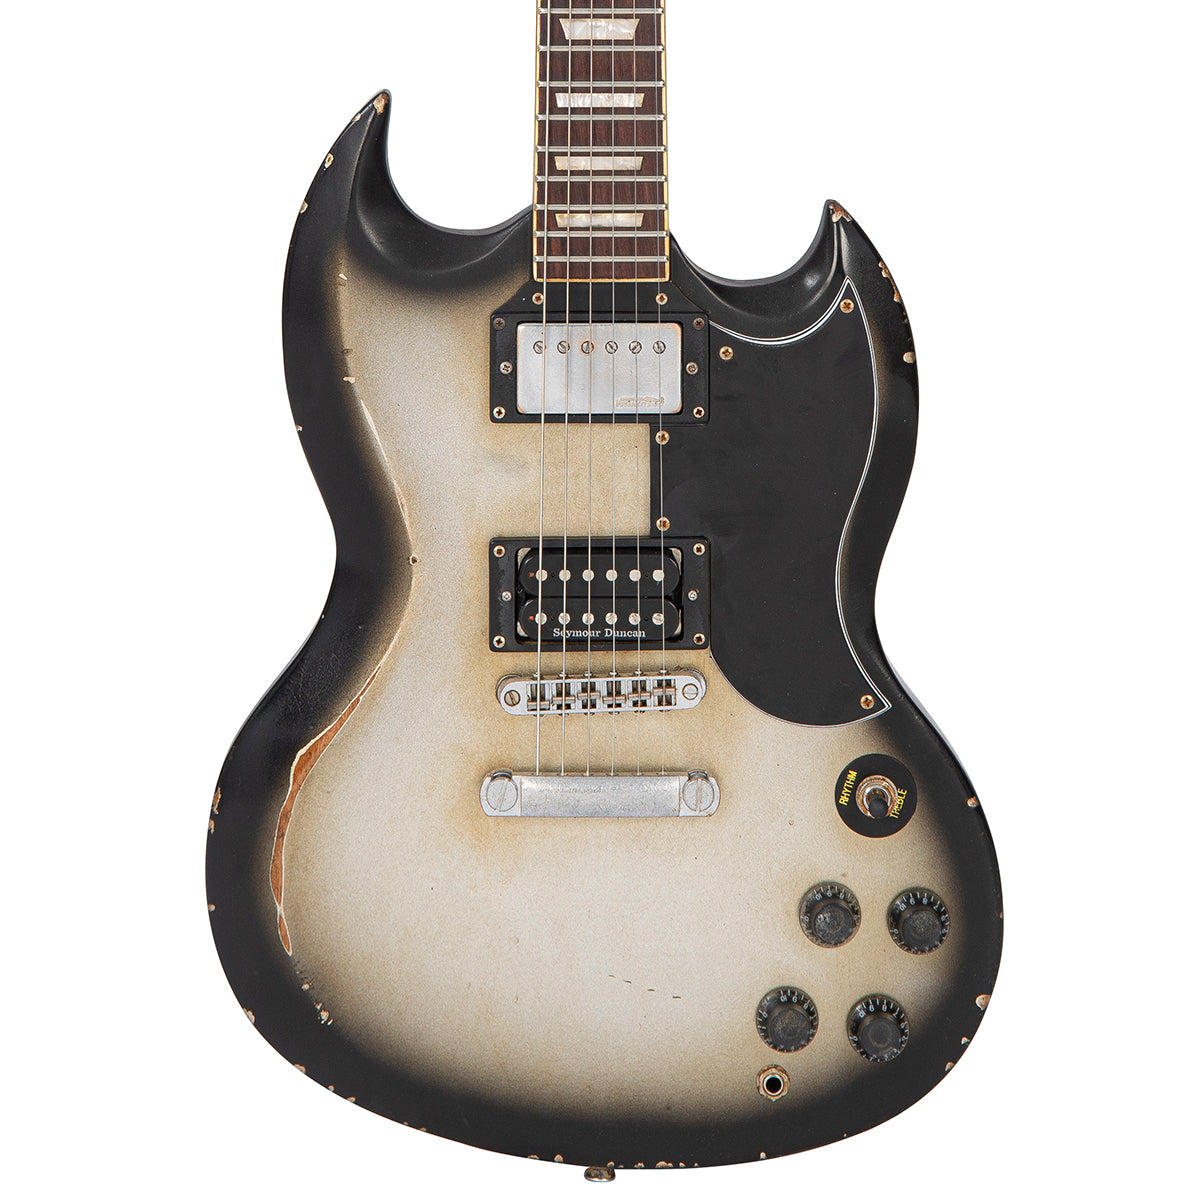 SOLD - Vintage VS6 ProShop Custom-Build ~ Heavy Relic Silver Burst, Electric Guitars for sale at Richards Guitars.